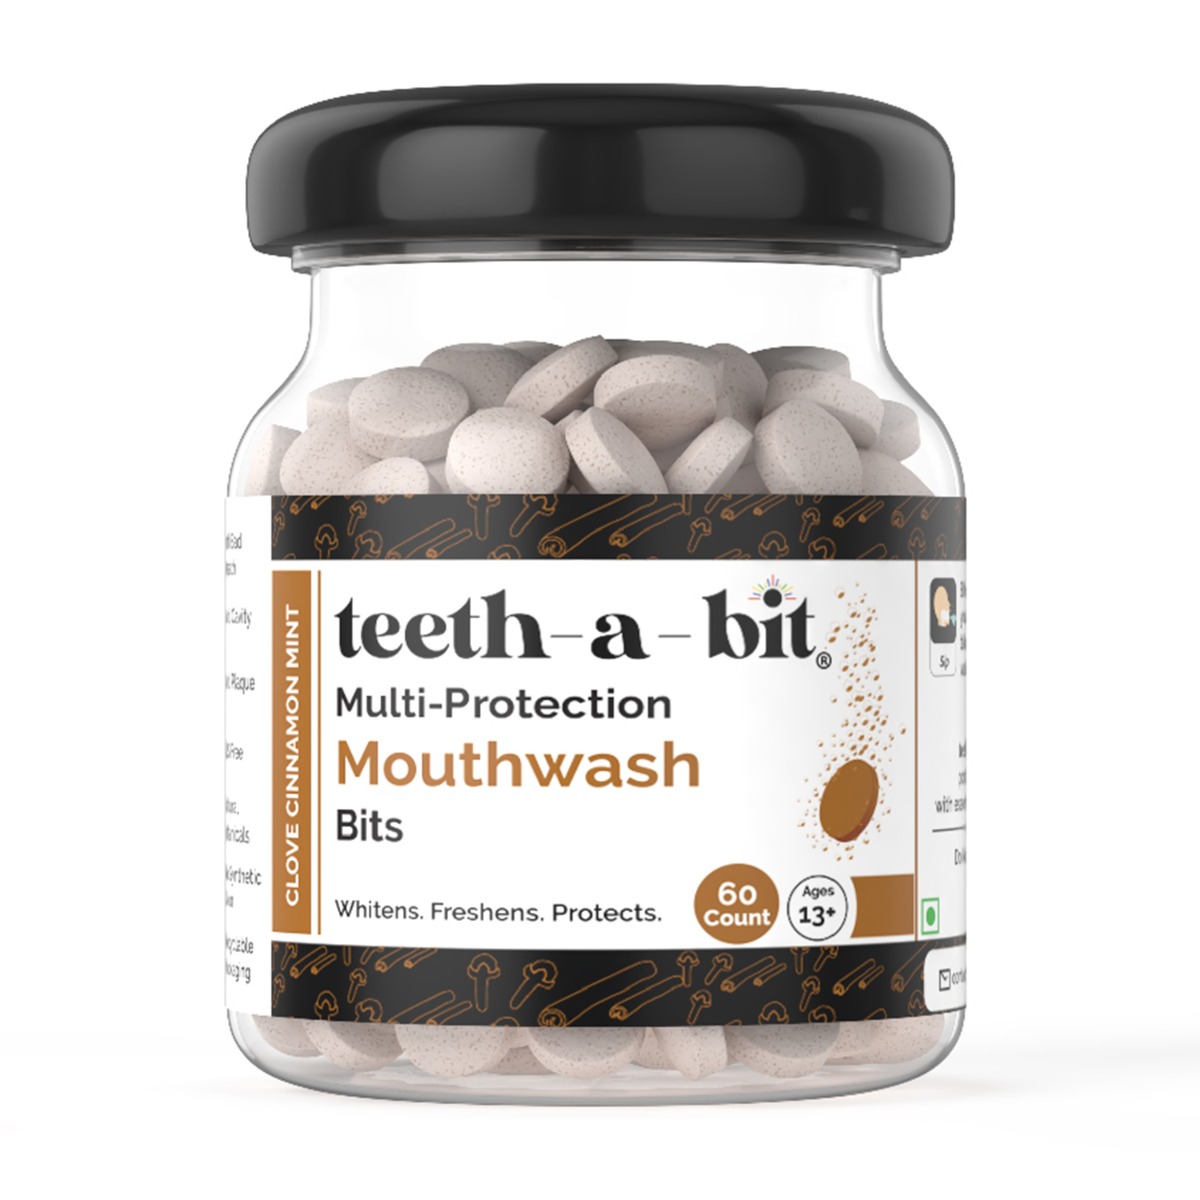 teeth-a-bit Multi-Protection Clove Cinnamon Mint Mouthwash Bits, 60 Count